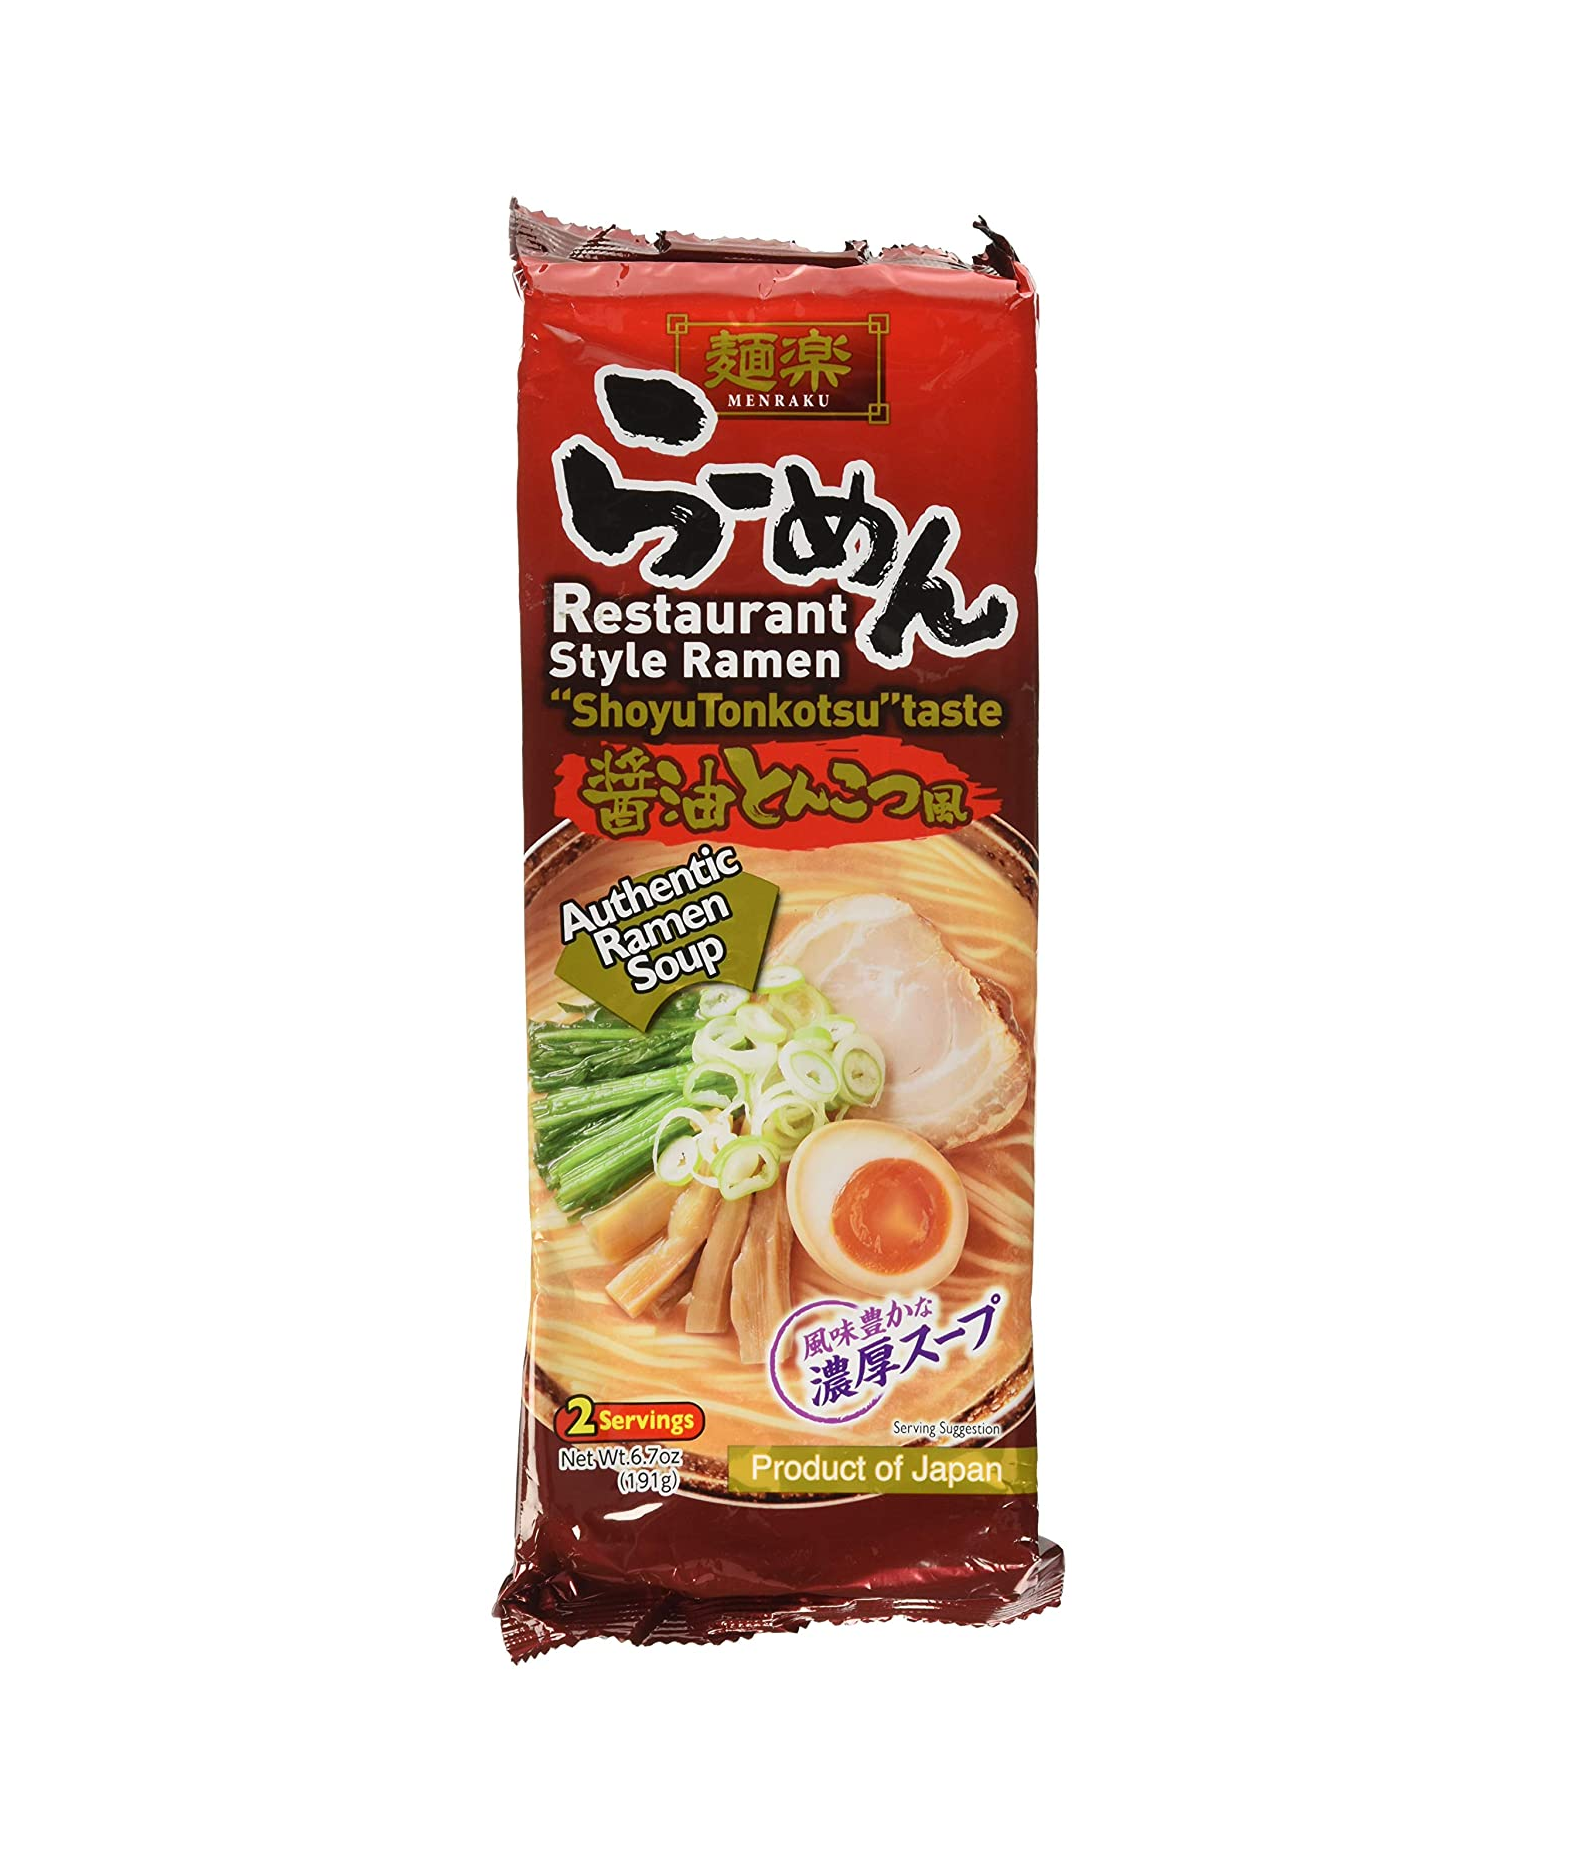 Hikari Miso Ramen shoyu tonkotsu flavor